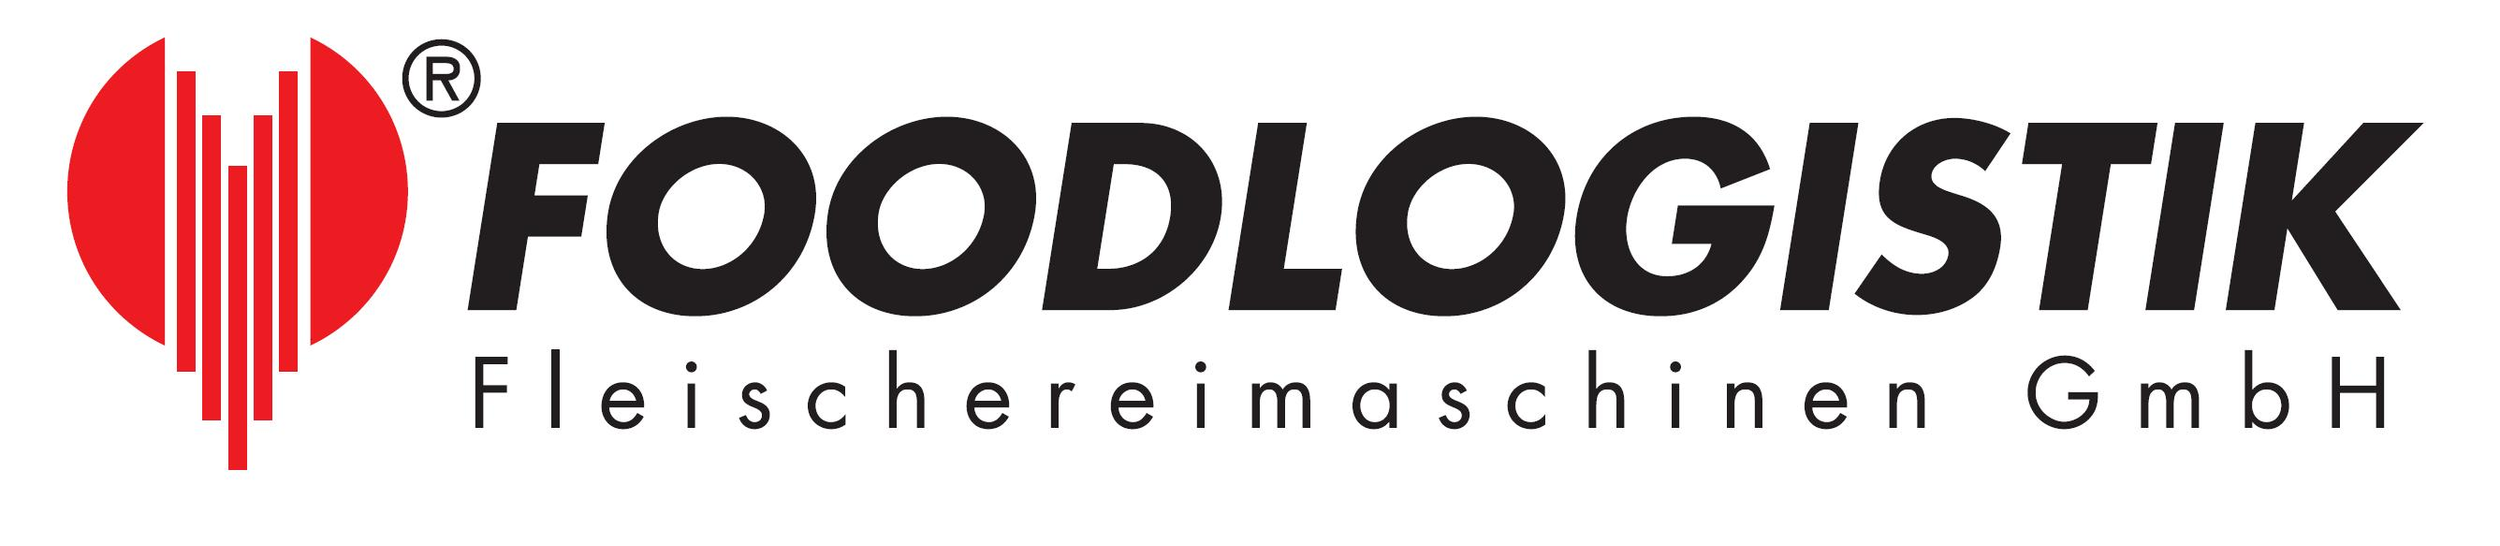 Foodlogistik_-_logo.png